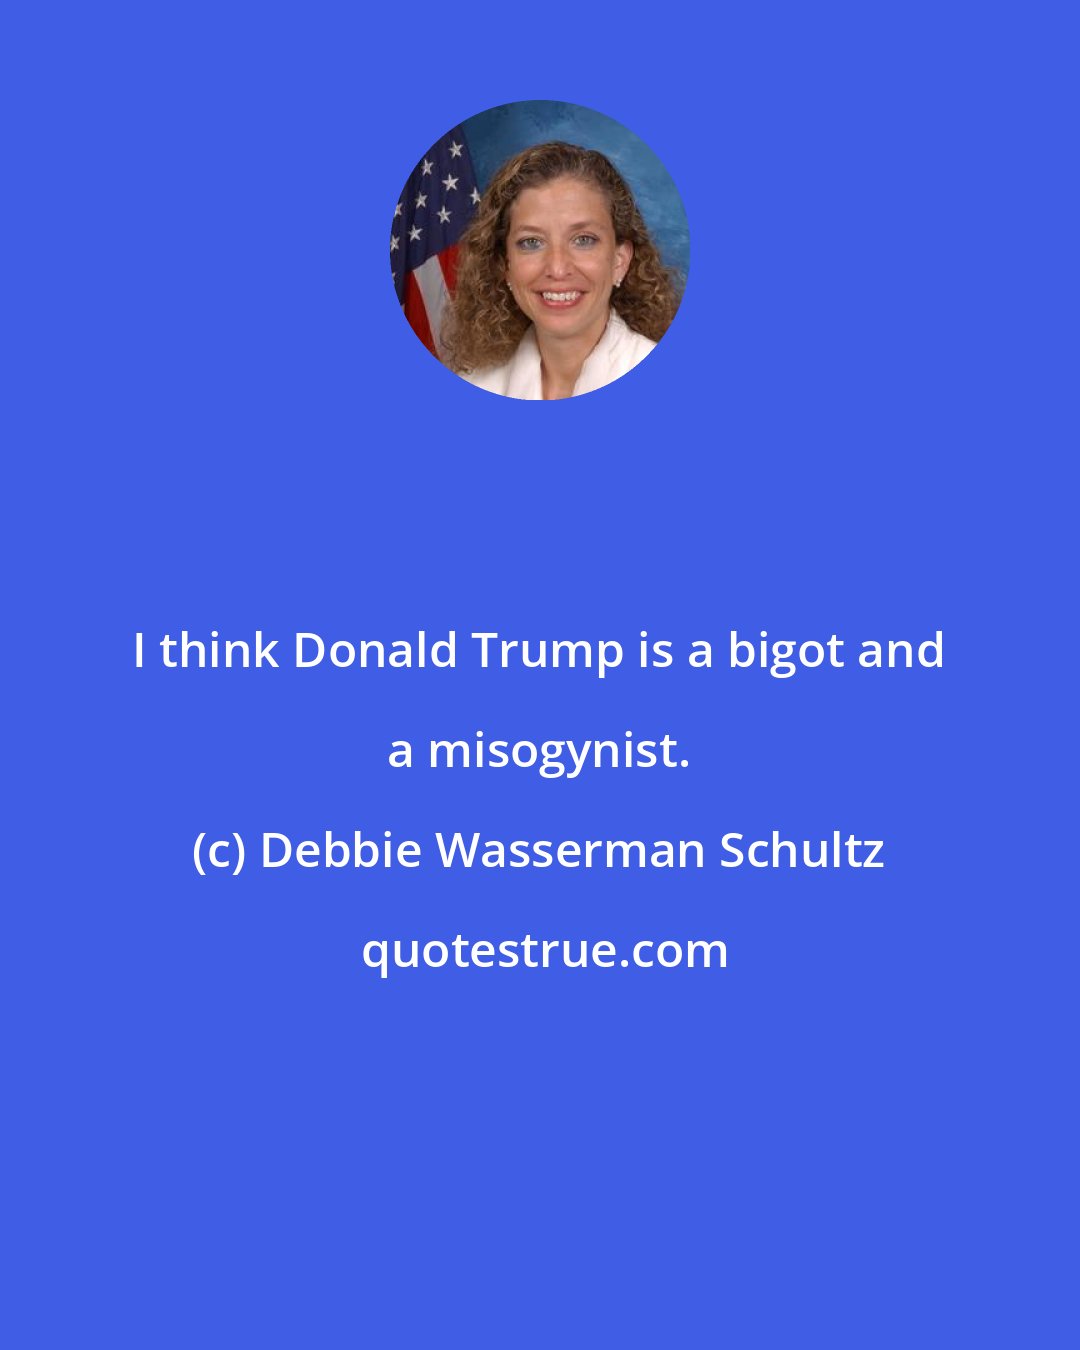 Debbie Wasserman Schultz: I think Donald Trump is a bigot and a misogynist.